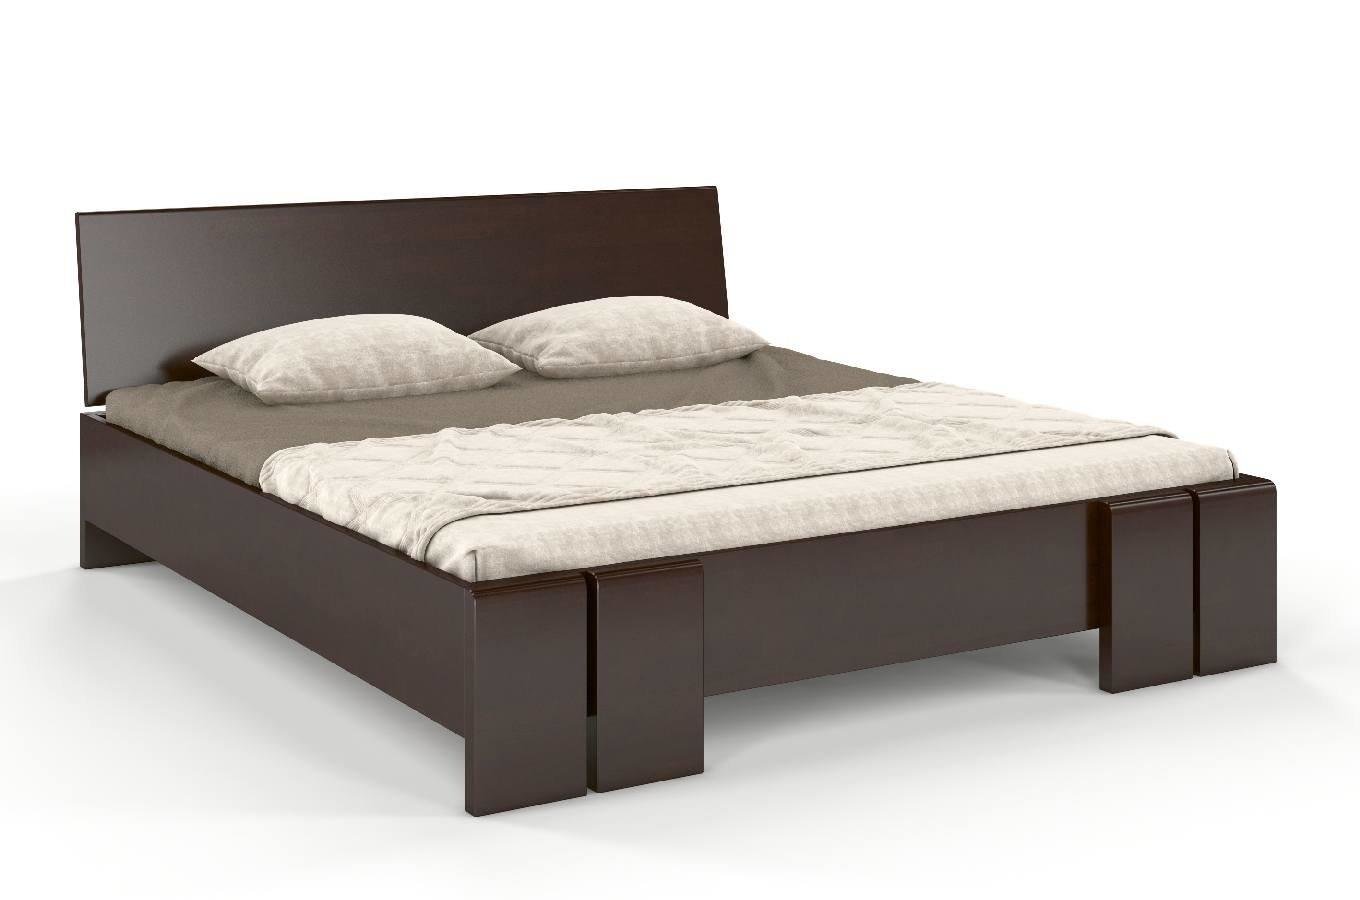 Łóżko drewniane bukowe Skandica VESTRE Maxi / 160x200 cm, kolor palisander